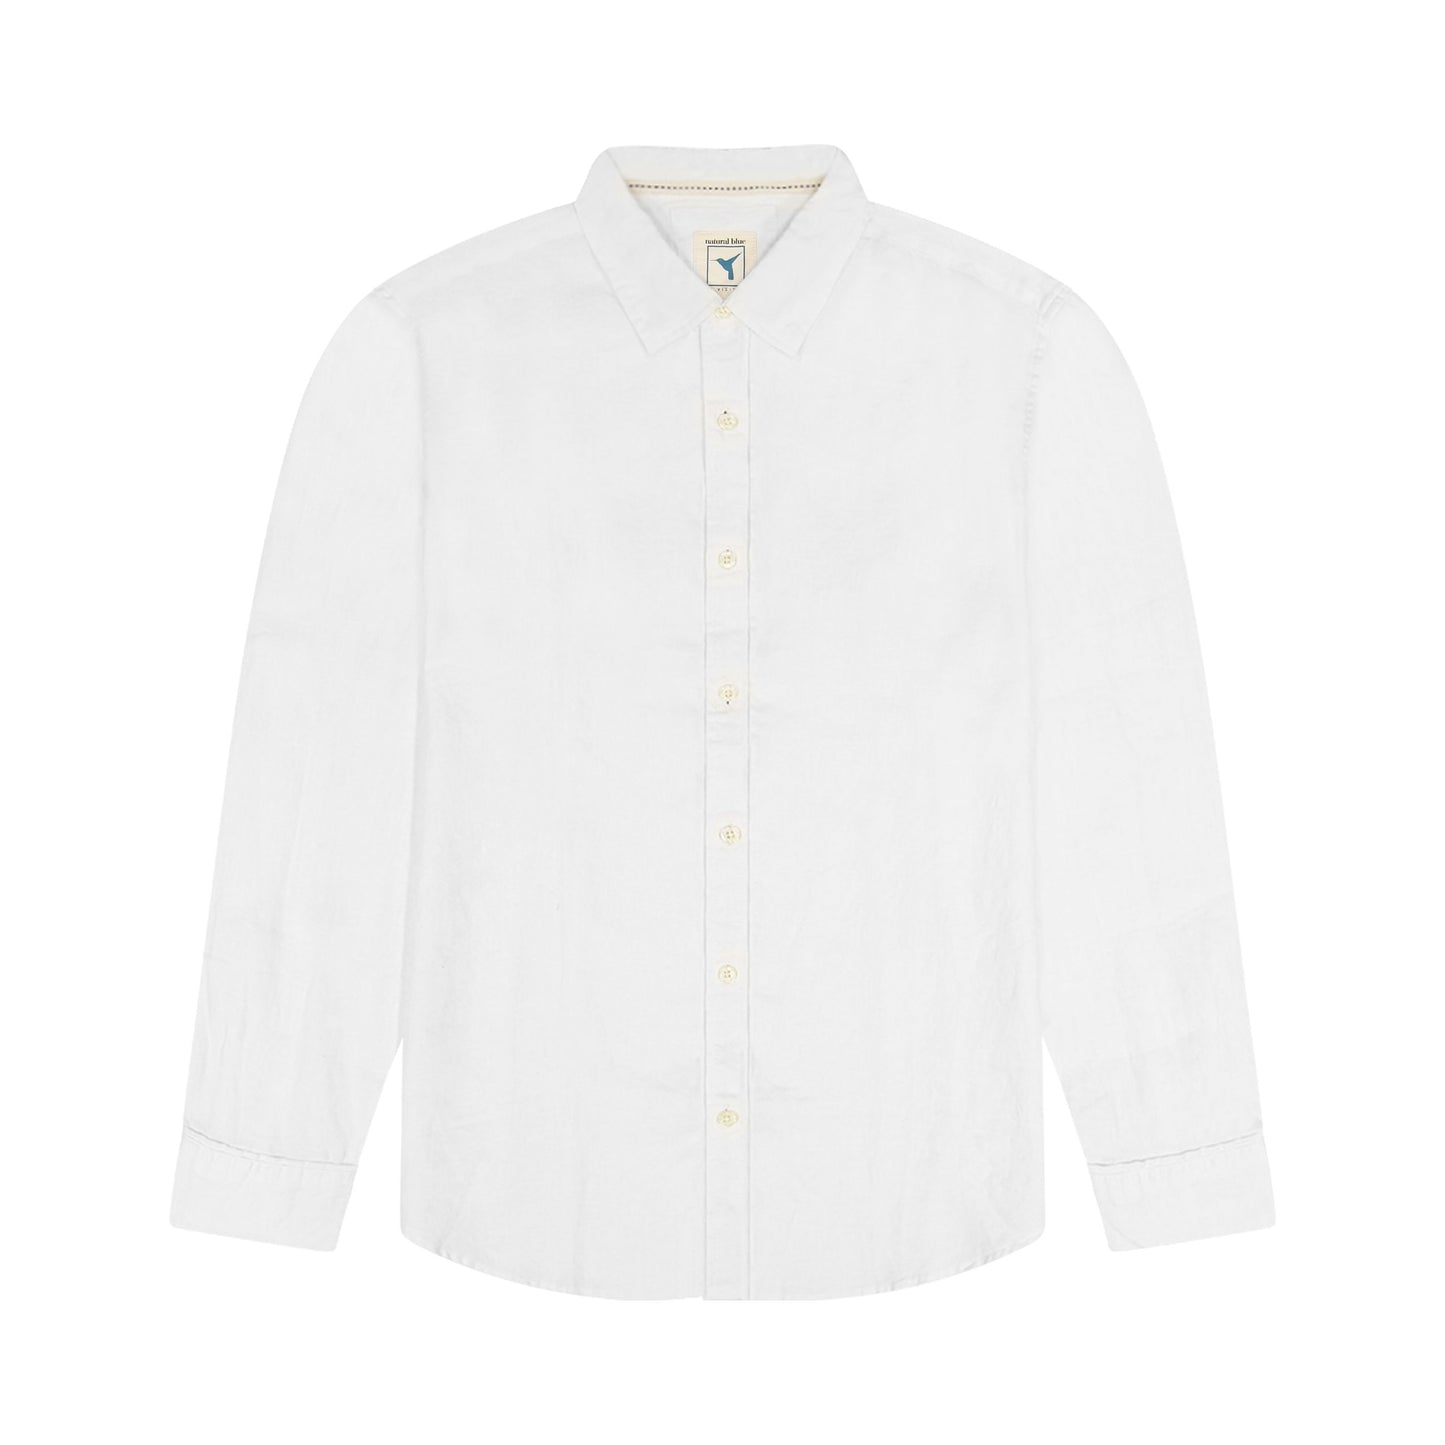 The Hamptons Long Sleeve Eco-Conscious Linen Shirt